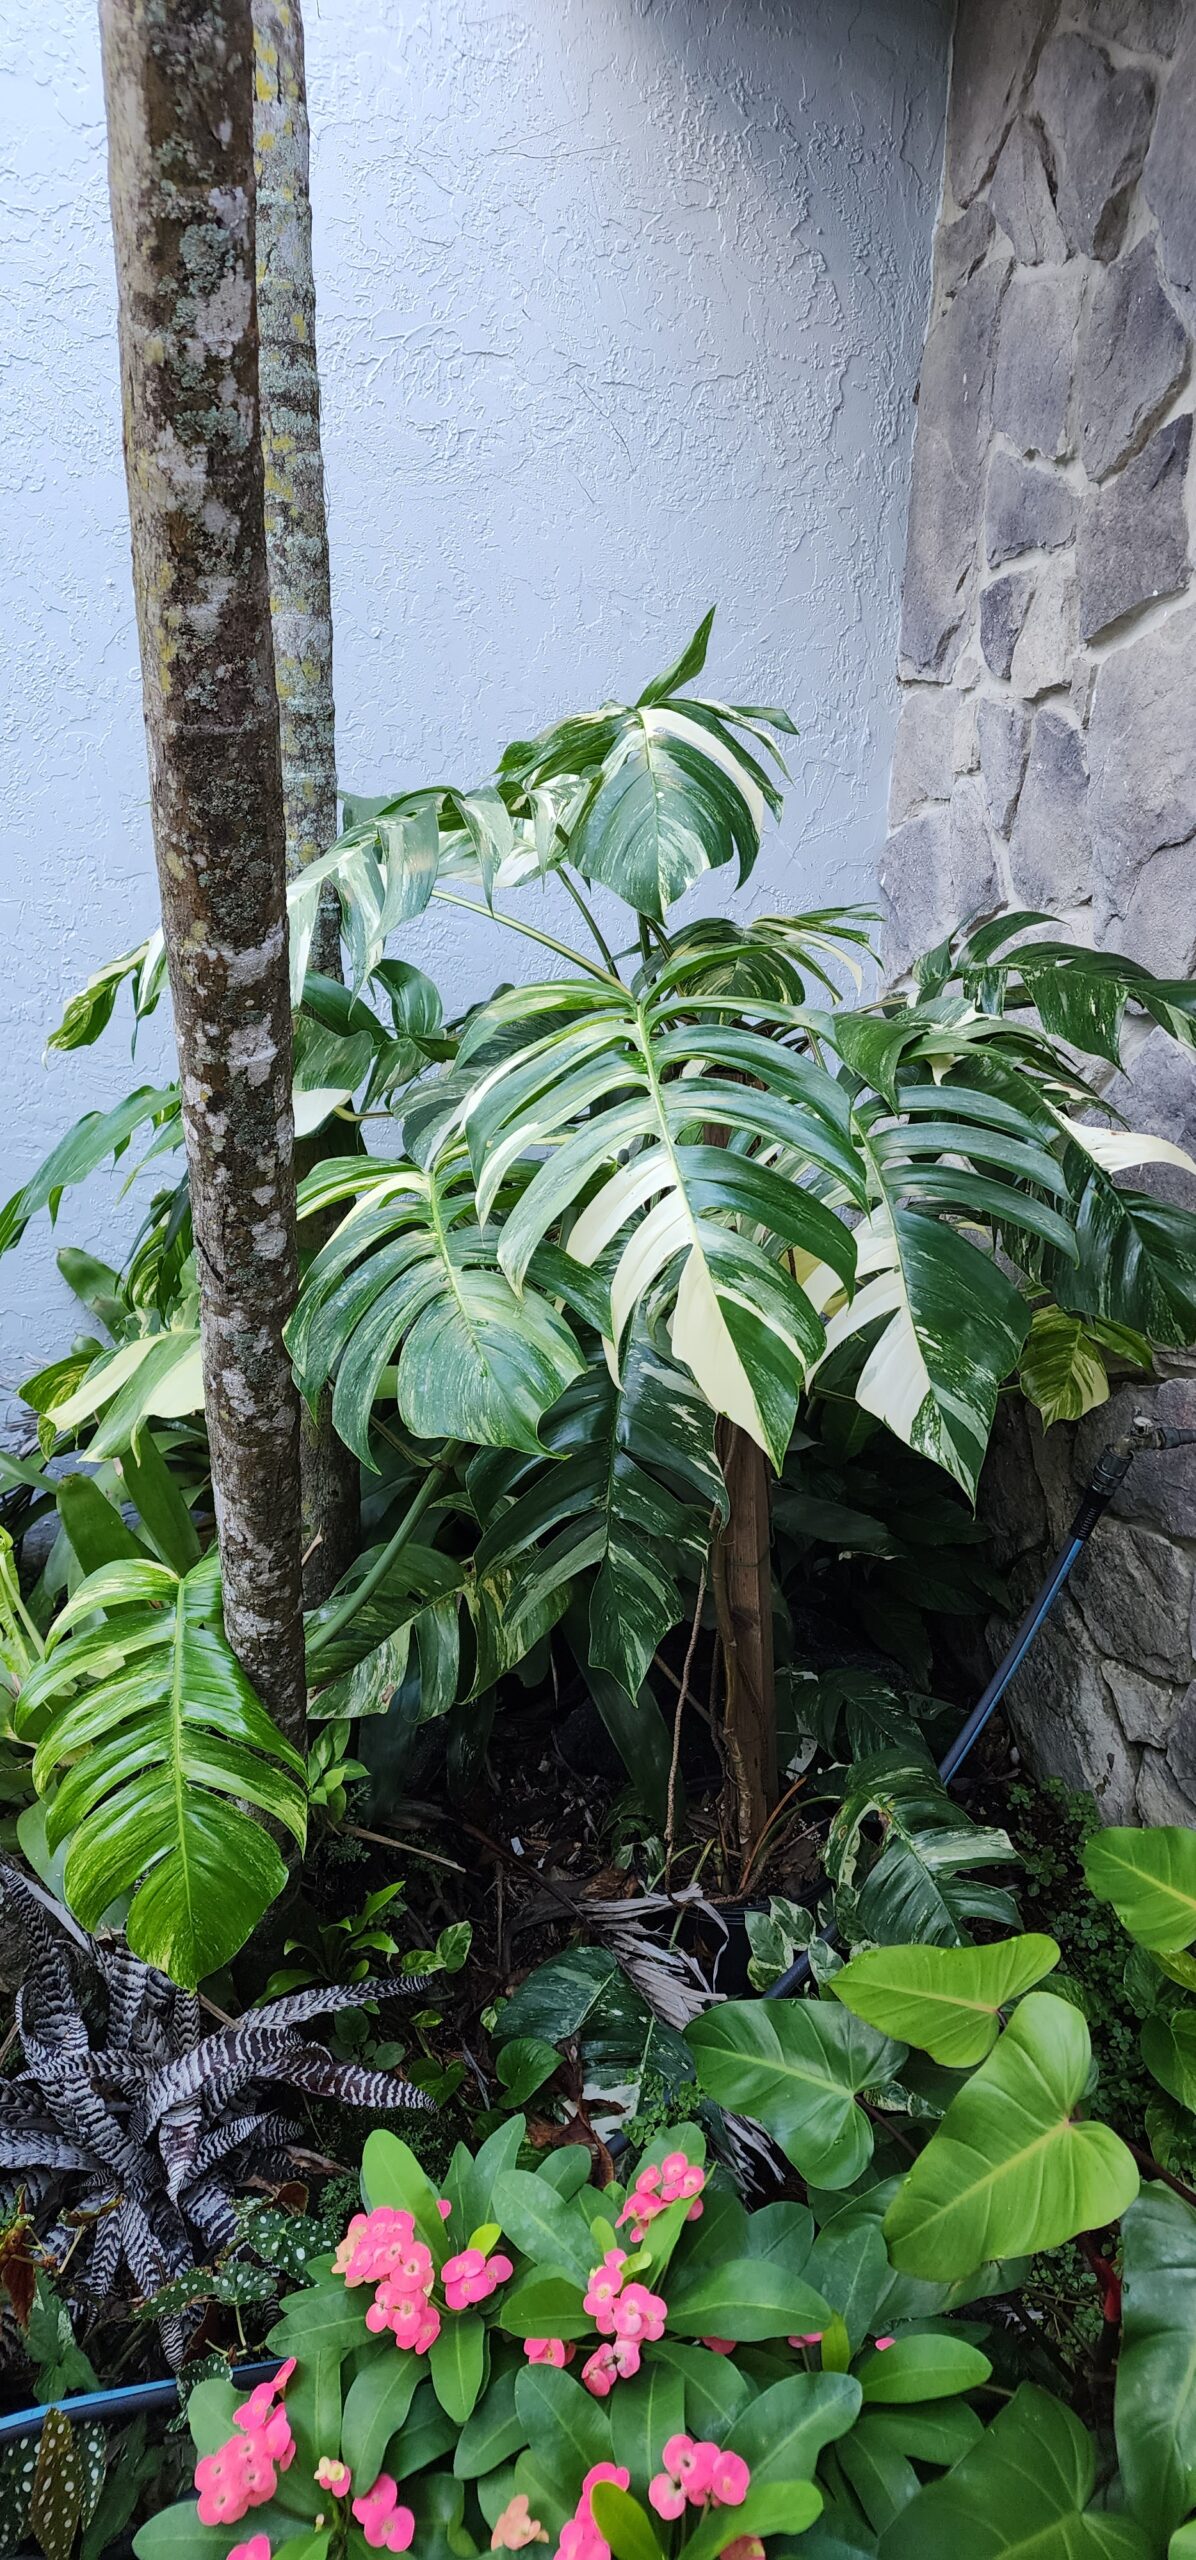 Epipremnum Pinnatum Albo Variegated Plant - Mawar Hitam Flora